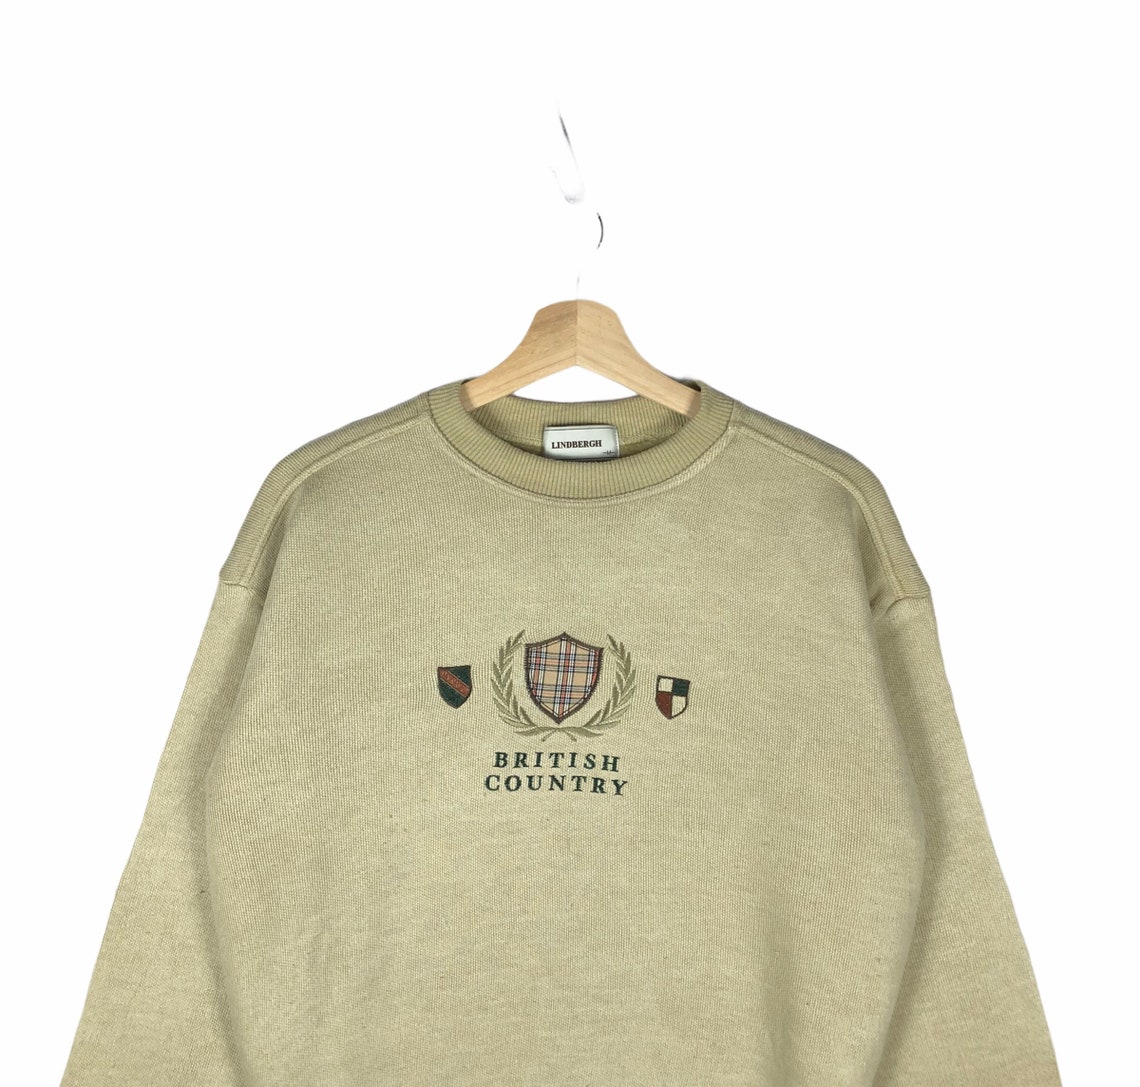 Vintage British country sweatshirt crewneck sweater embroidery | Etsy